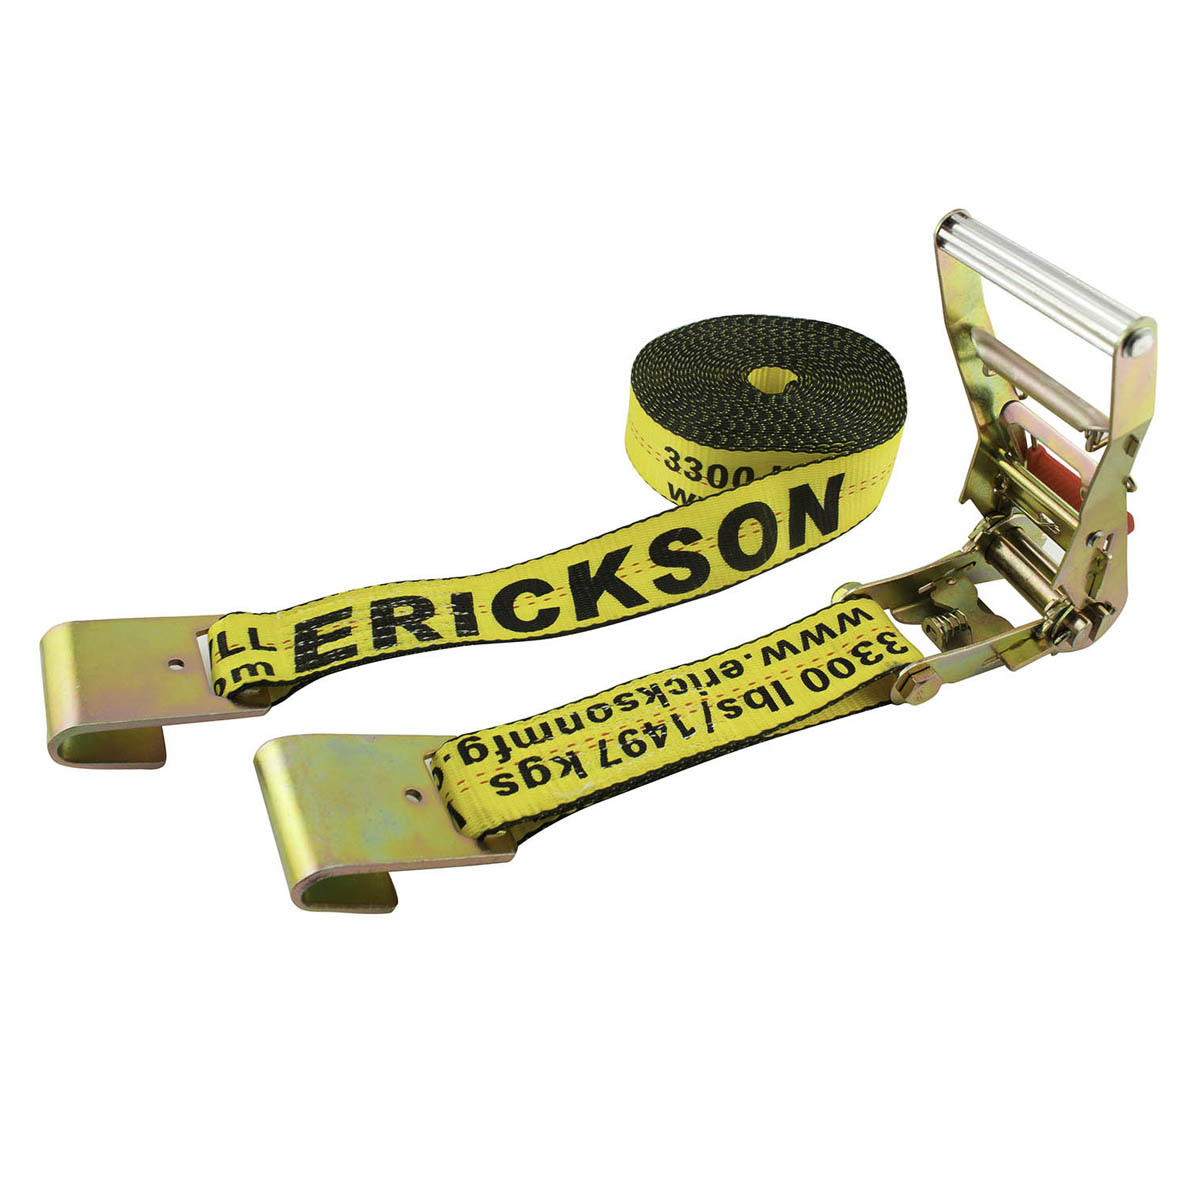 Erickson Long Handle Ratchet Strap - 2-in x 30-ft